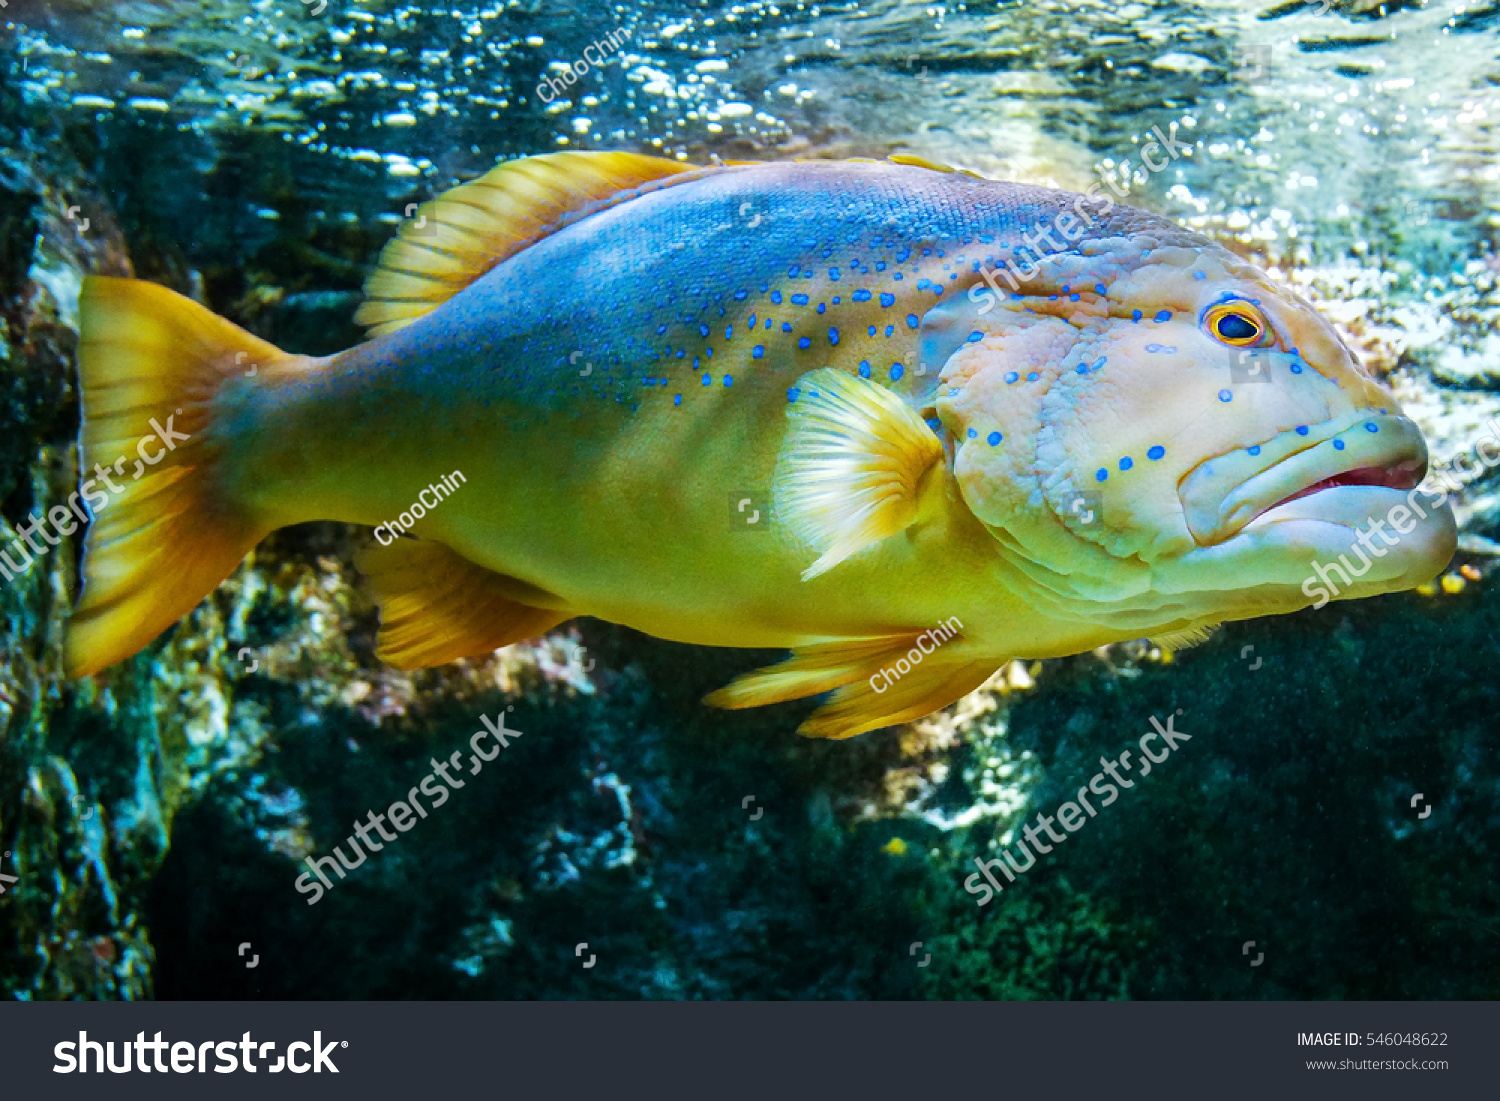 Blue Spotted Grouper Pet Fish Tank Stock Photo 546048622 - Shutterstock